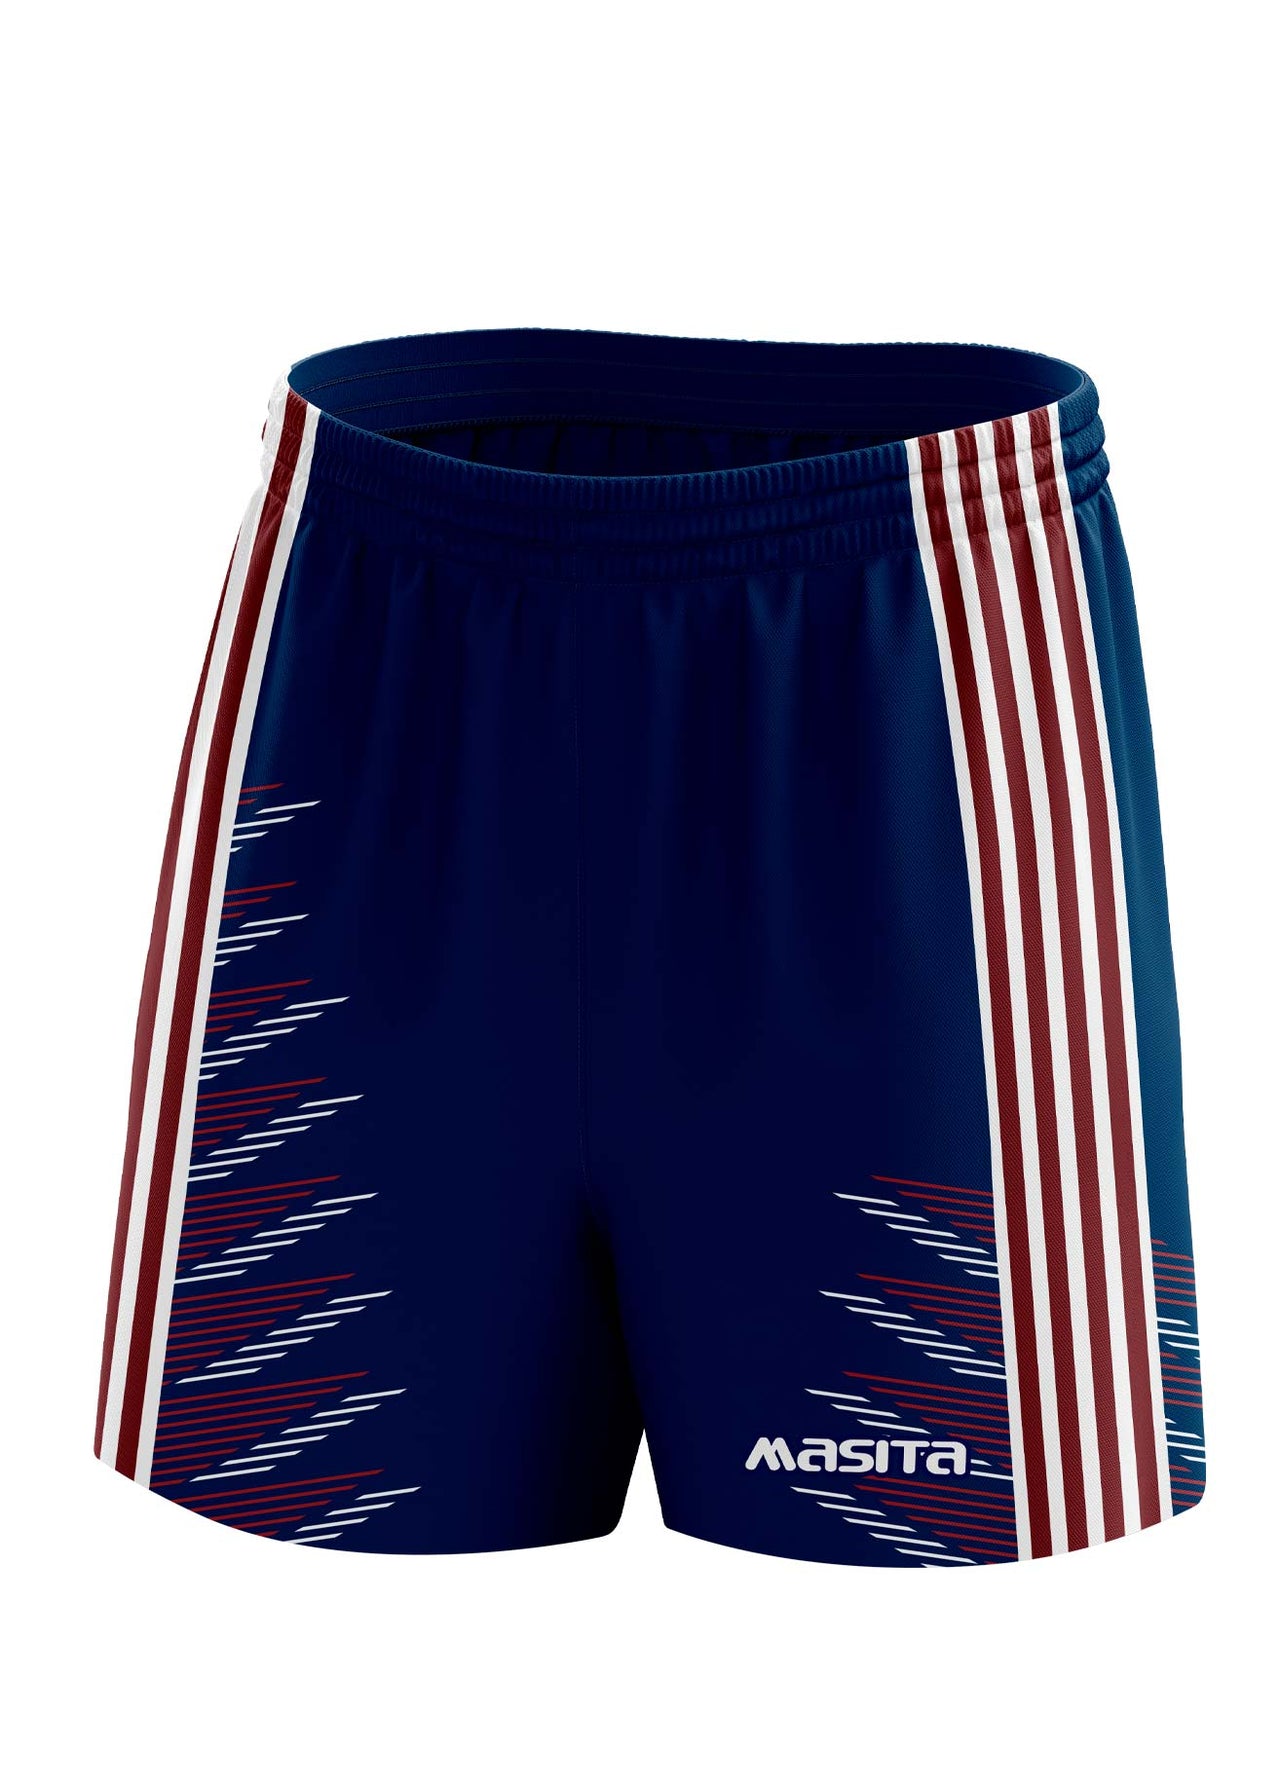 Hydro Gaelic Shorts Navy/Maroon/White Adult